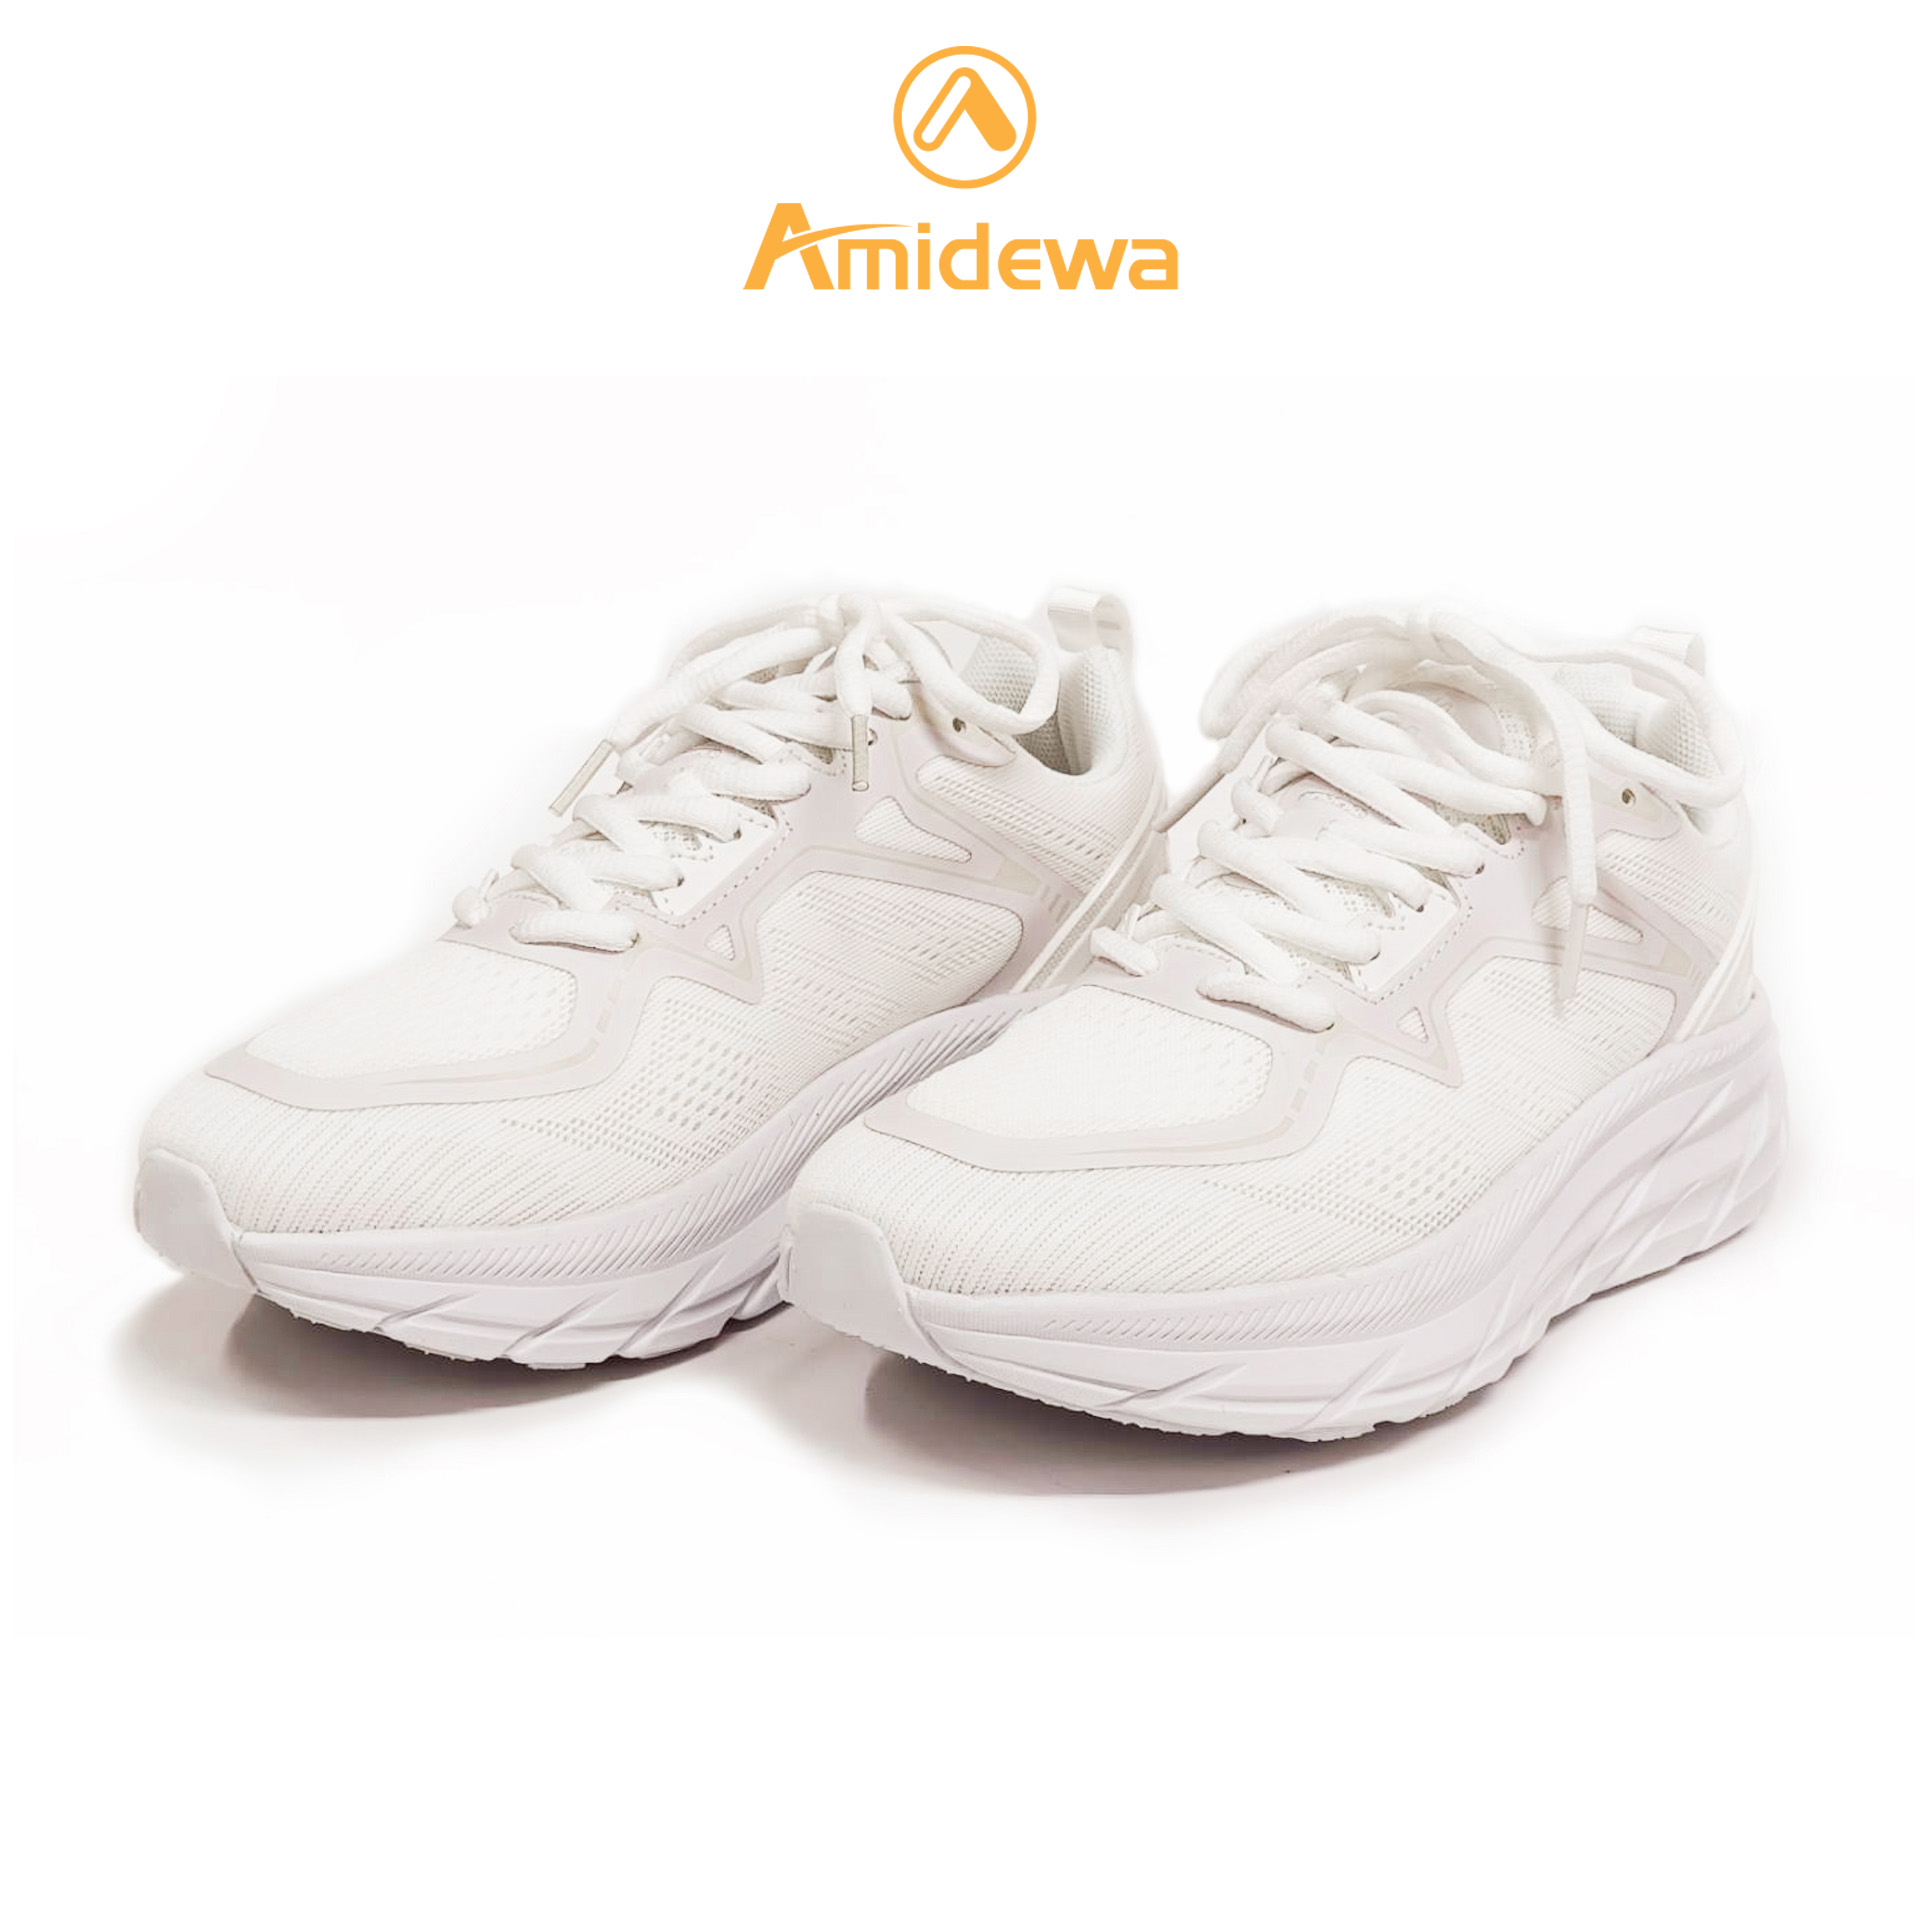 AMIDEWA รองเท้าผ้าใบสีขาว รองเท้ากีฬา สวมใส่สบาย กระชับ รหัส202302W